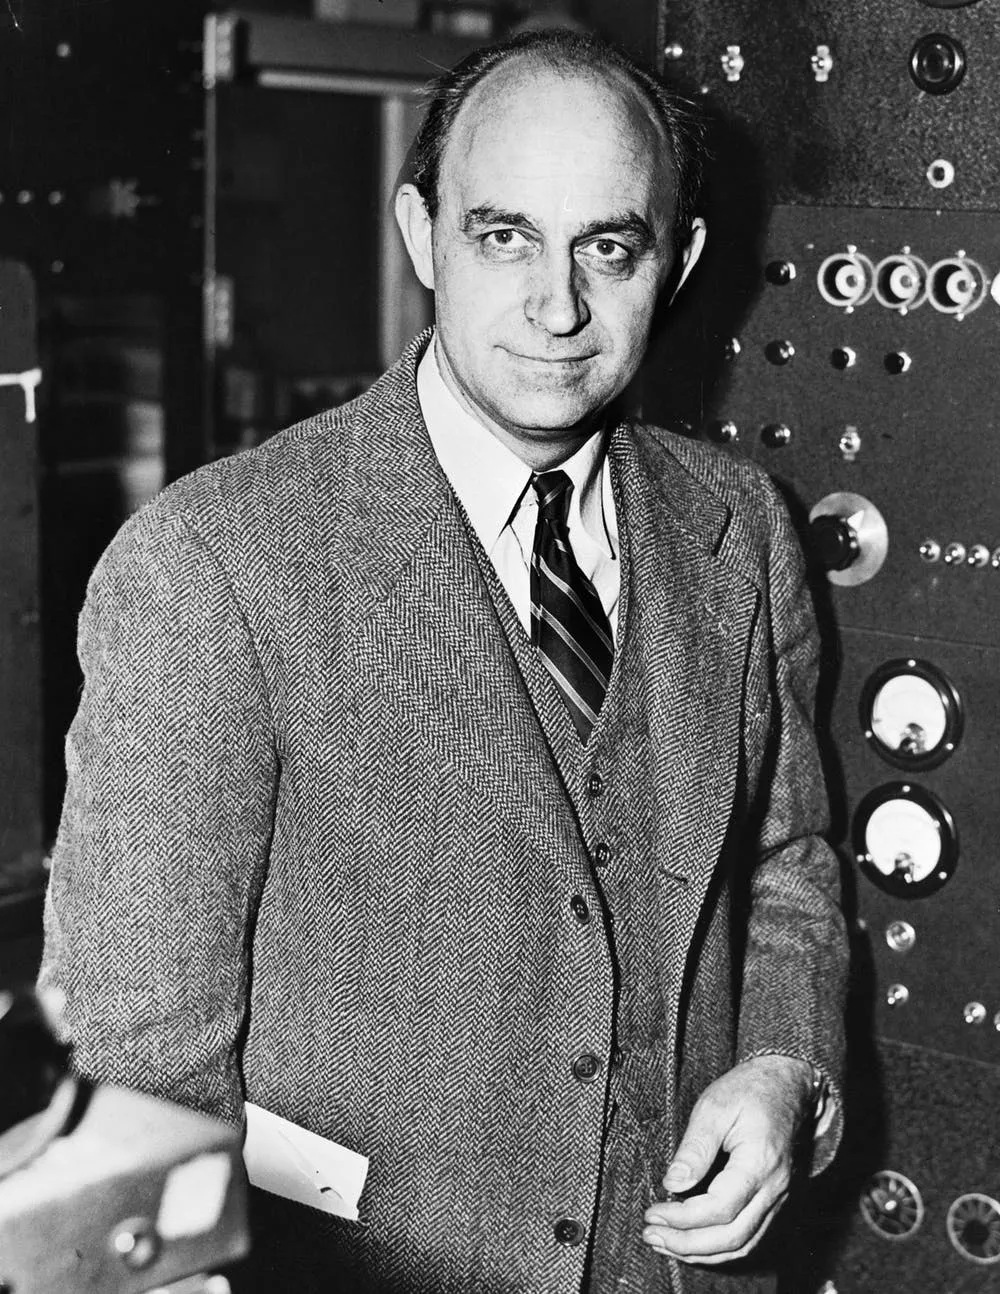 Nobel Prize winner Enrico Fermi led the project